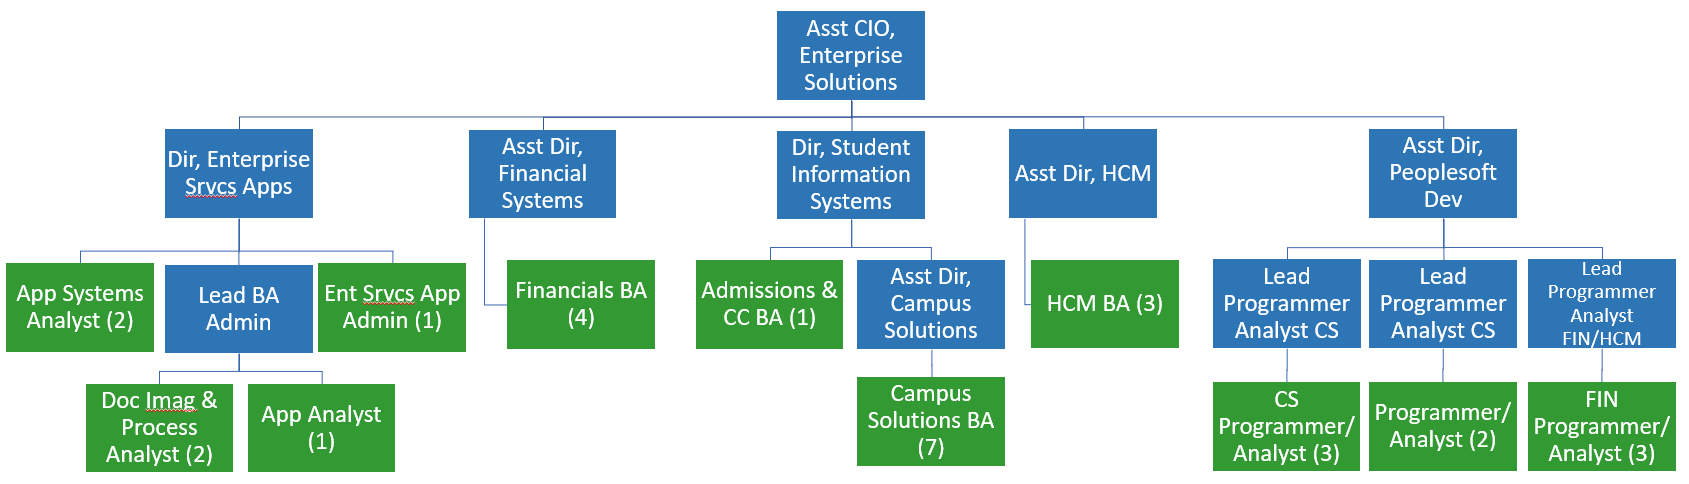 cognizant organization chart